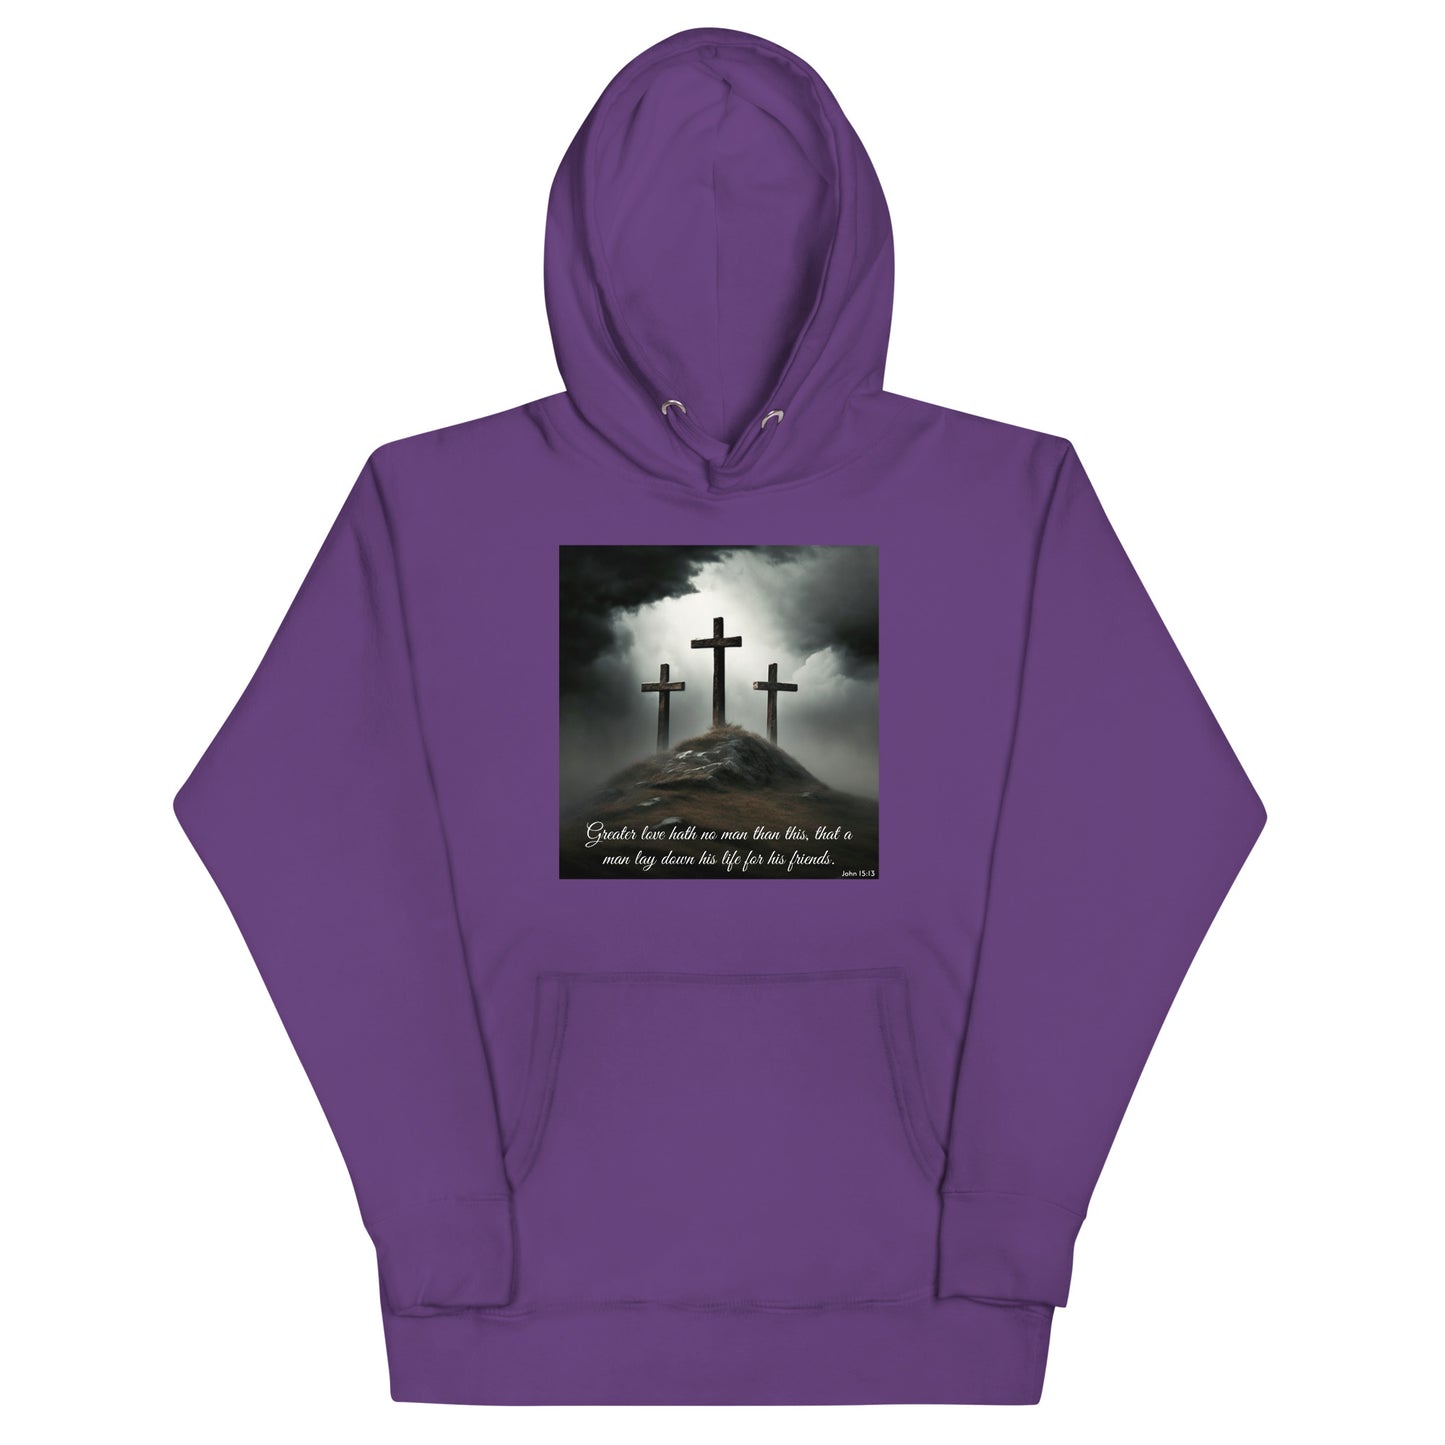 Three Crosses Crucifixion Men's Hooded Sweatshirt John 15:13 Purple